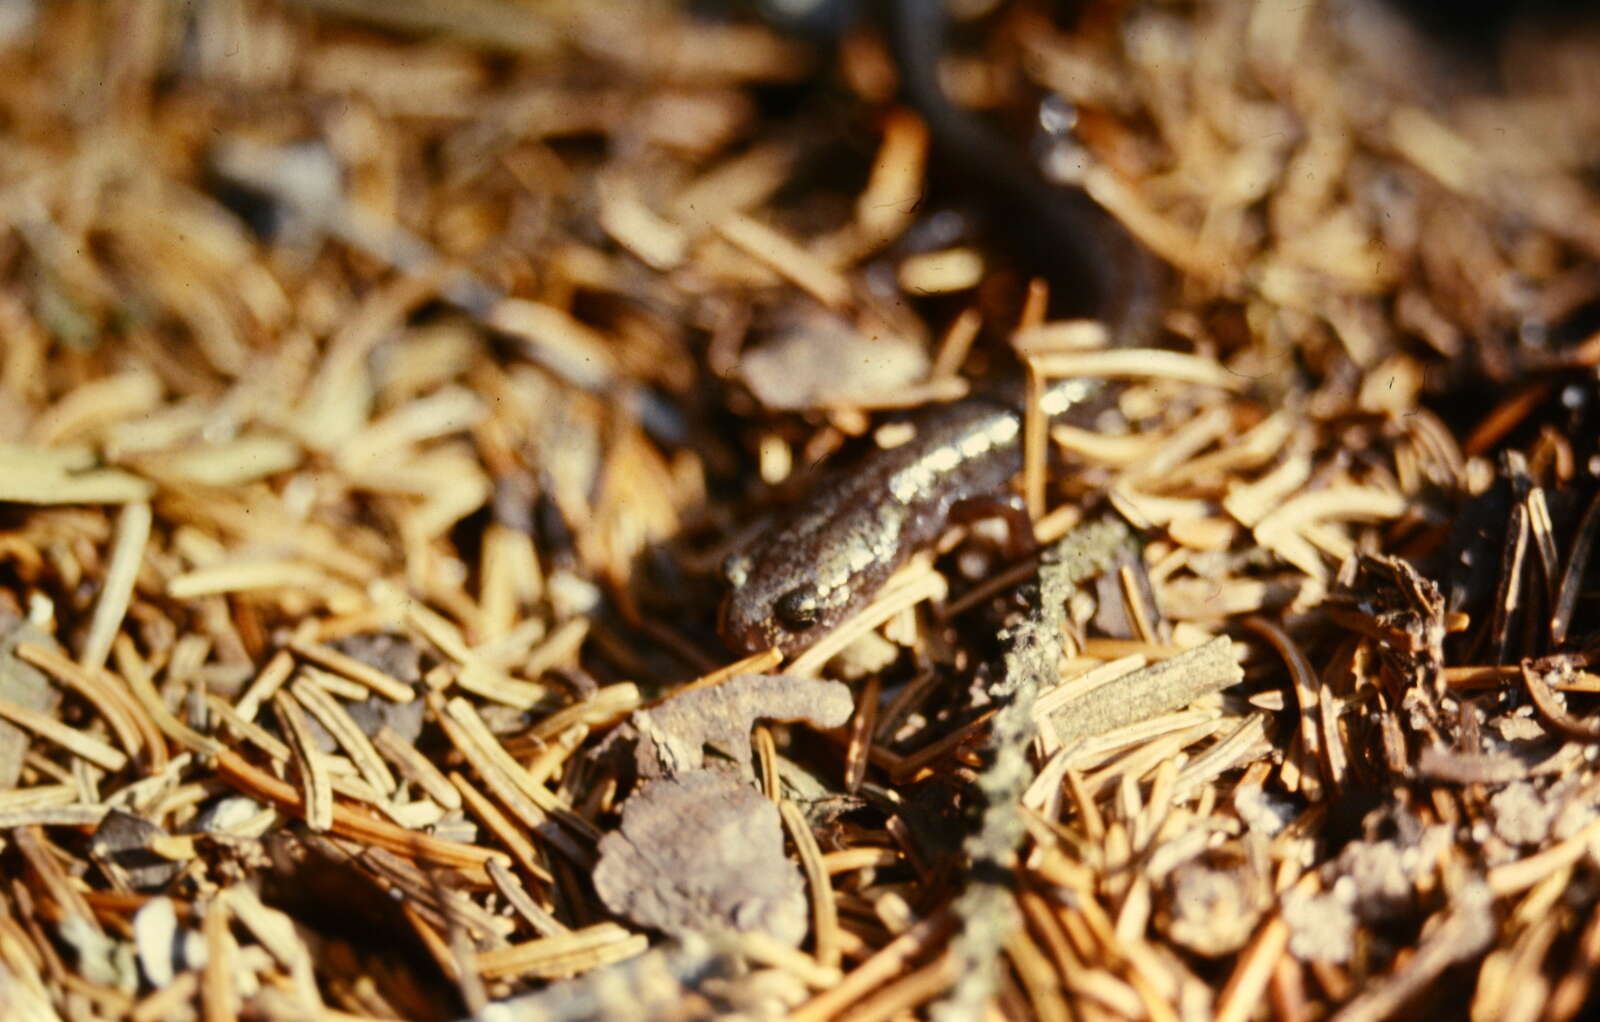 Image of Cheat Mountain salamander